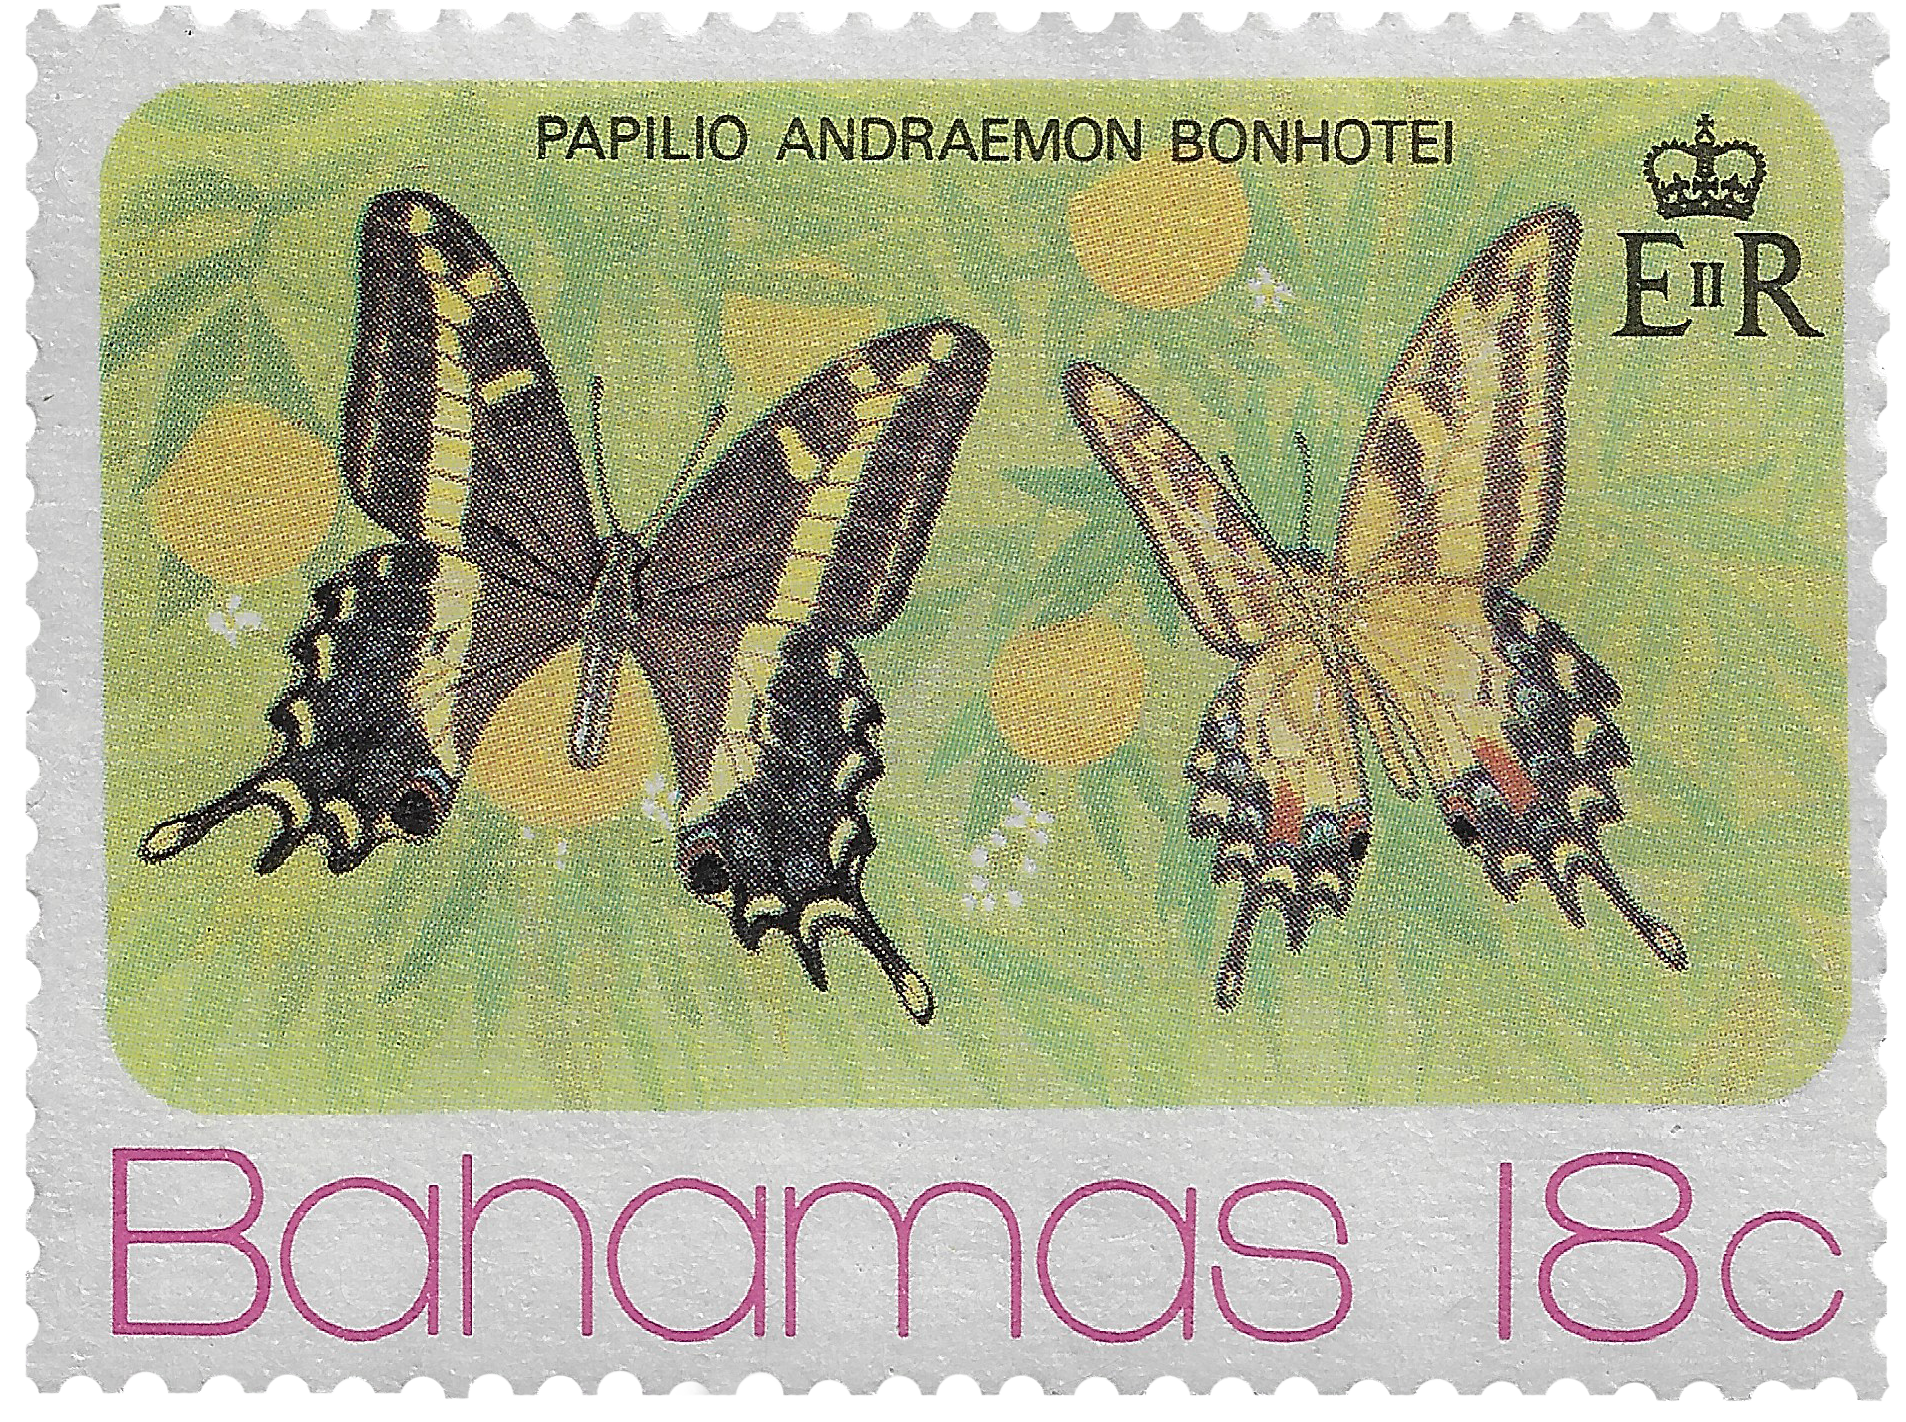 18c 1975, Papilio Andraemon Bonhotei, Butterfly